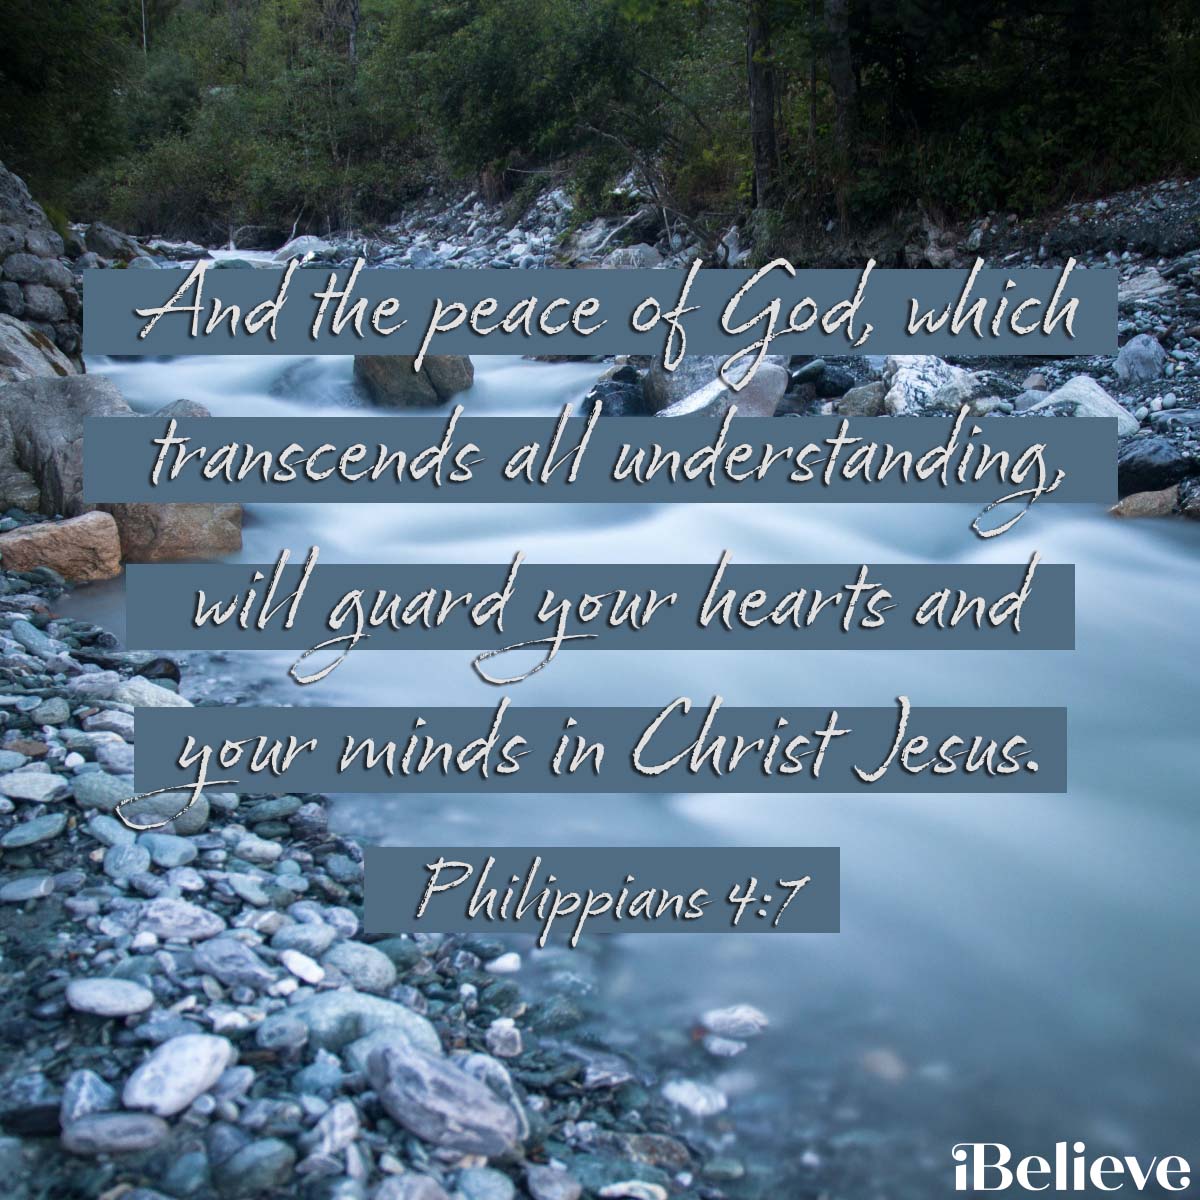 Phil. 4:7, inspirational image